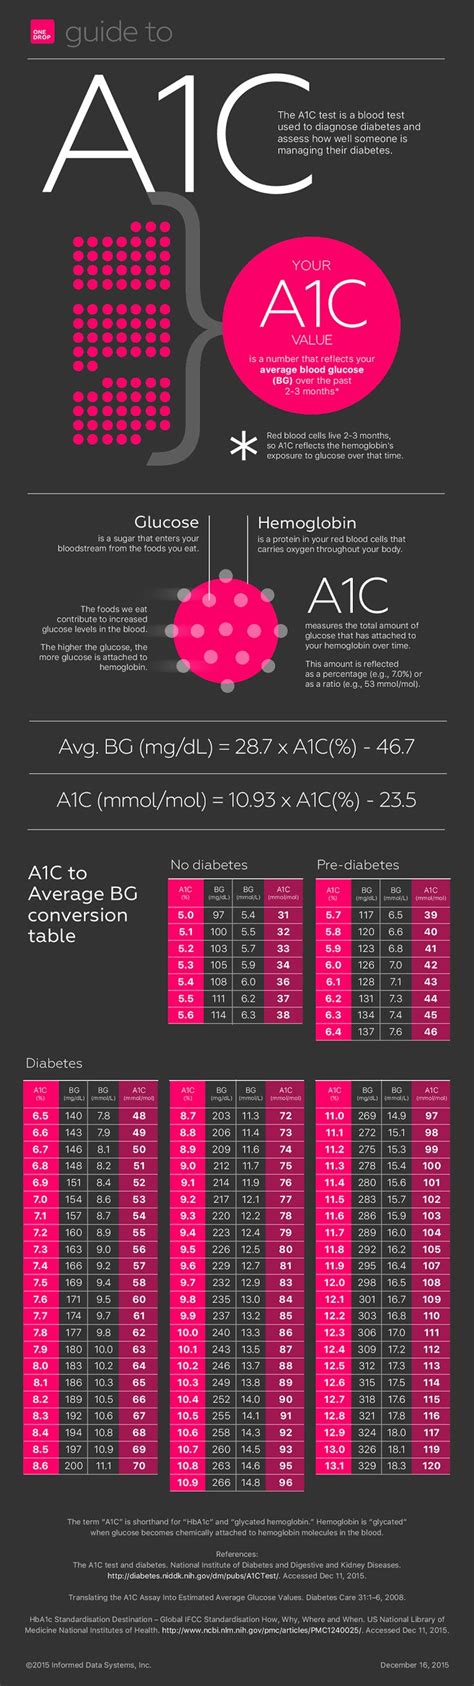 A1c And Diabetes Infographic Diabetes Facts Diabetes Information A1c